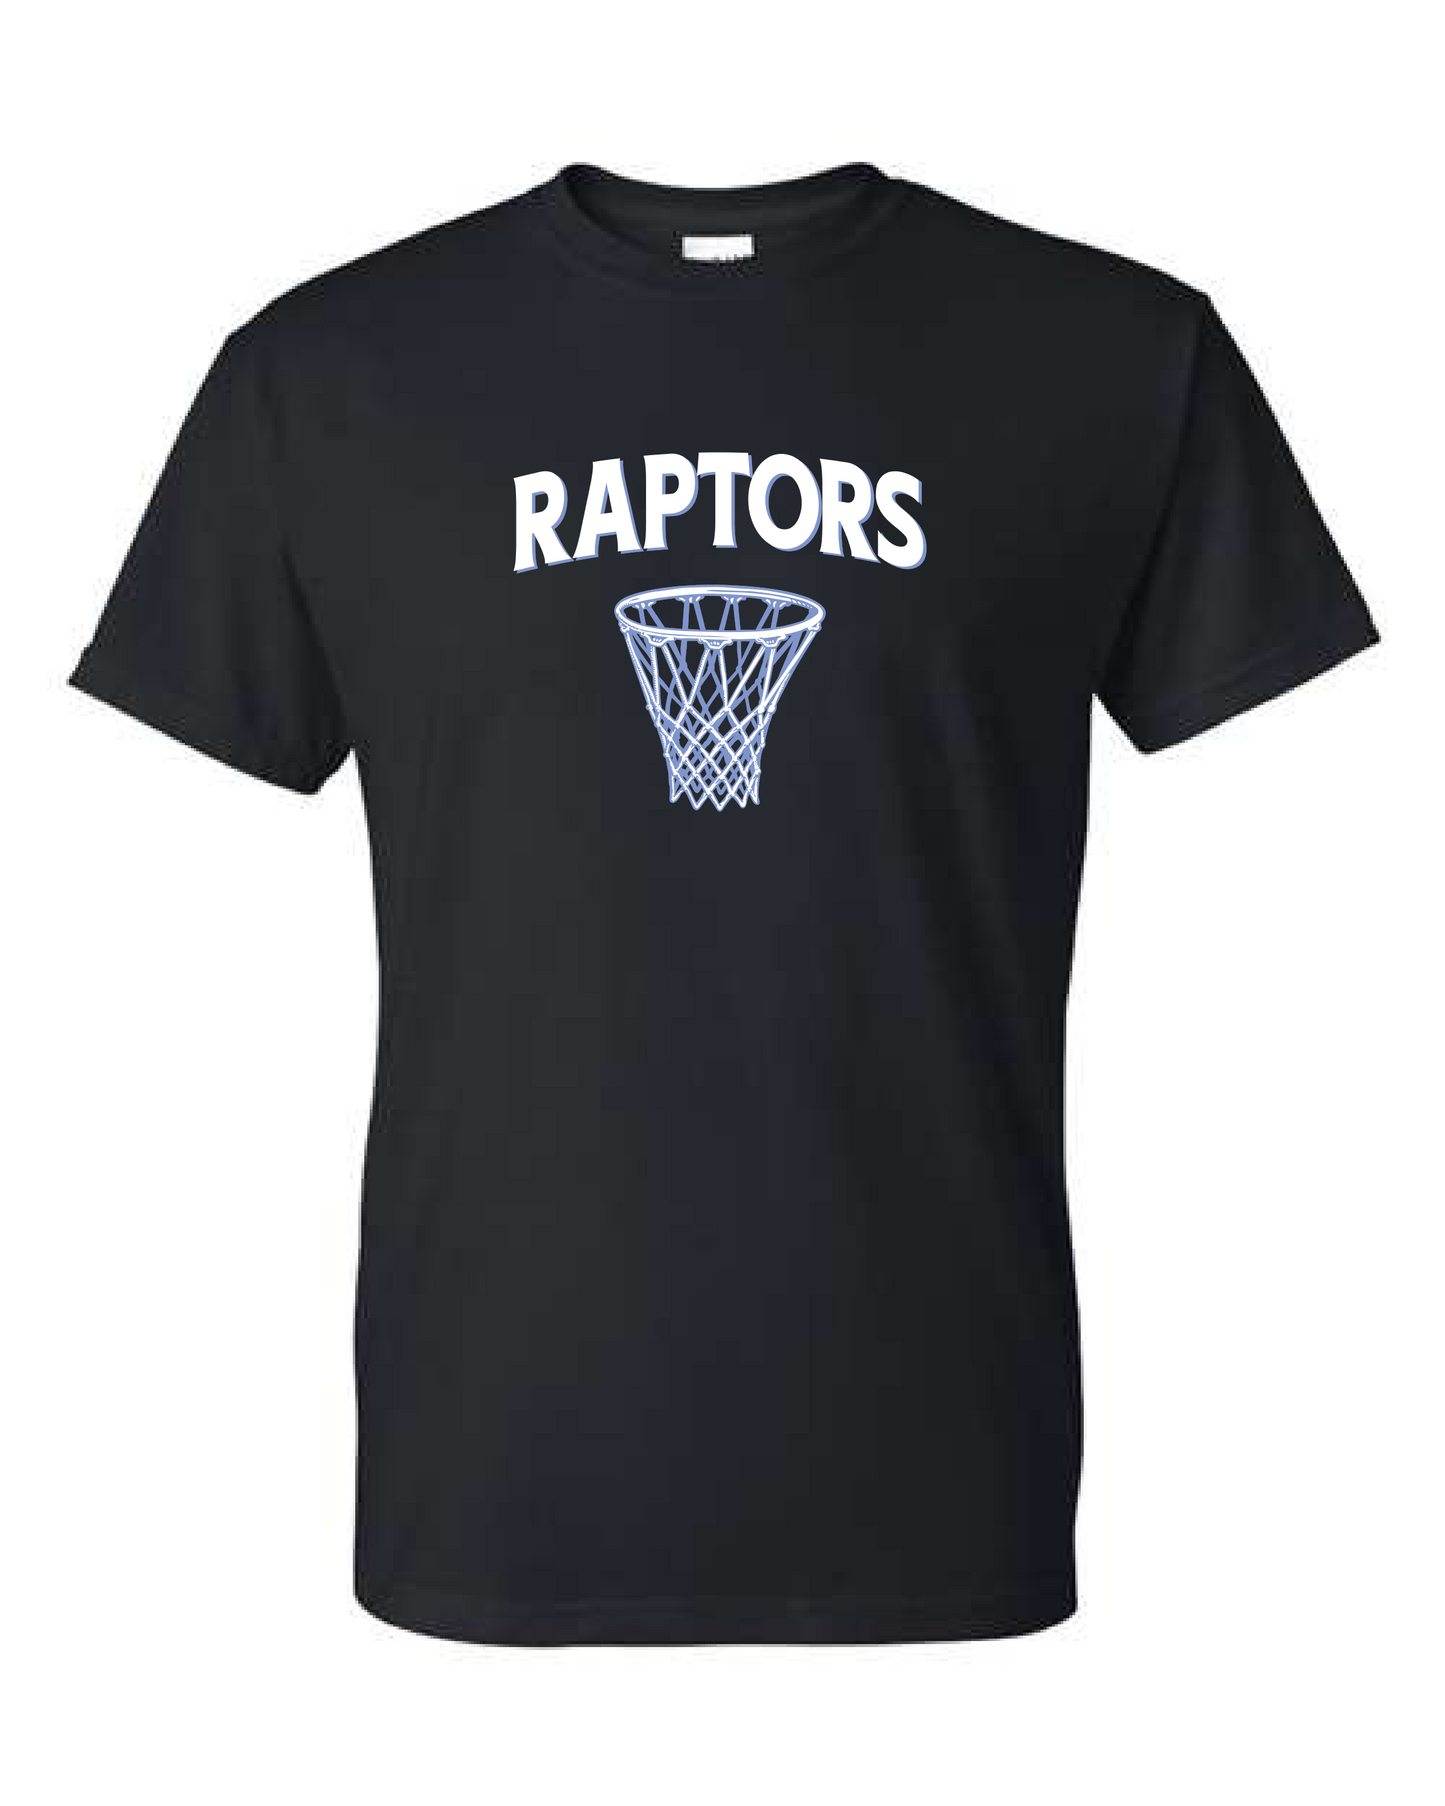 NJ Raptors Basketball Hoop Logo Tshirt Black